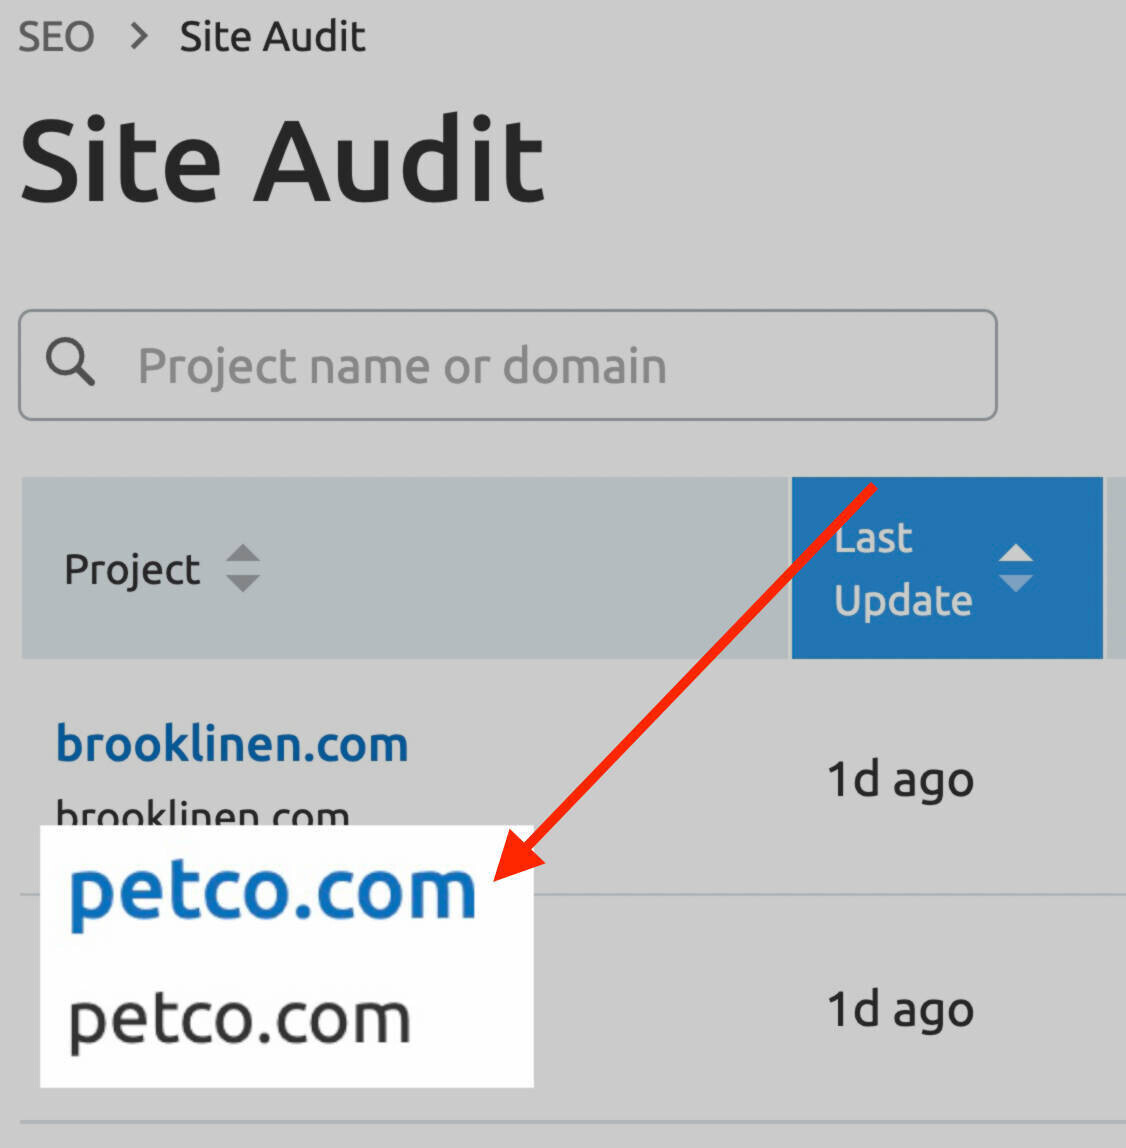 a created "petco.com" project in Semrush's Site Audit tool